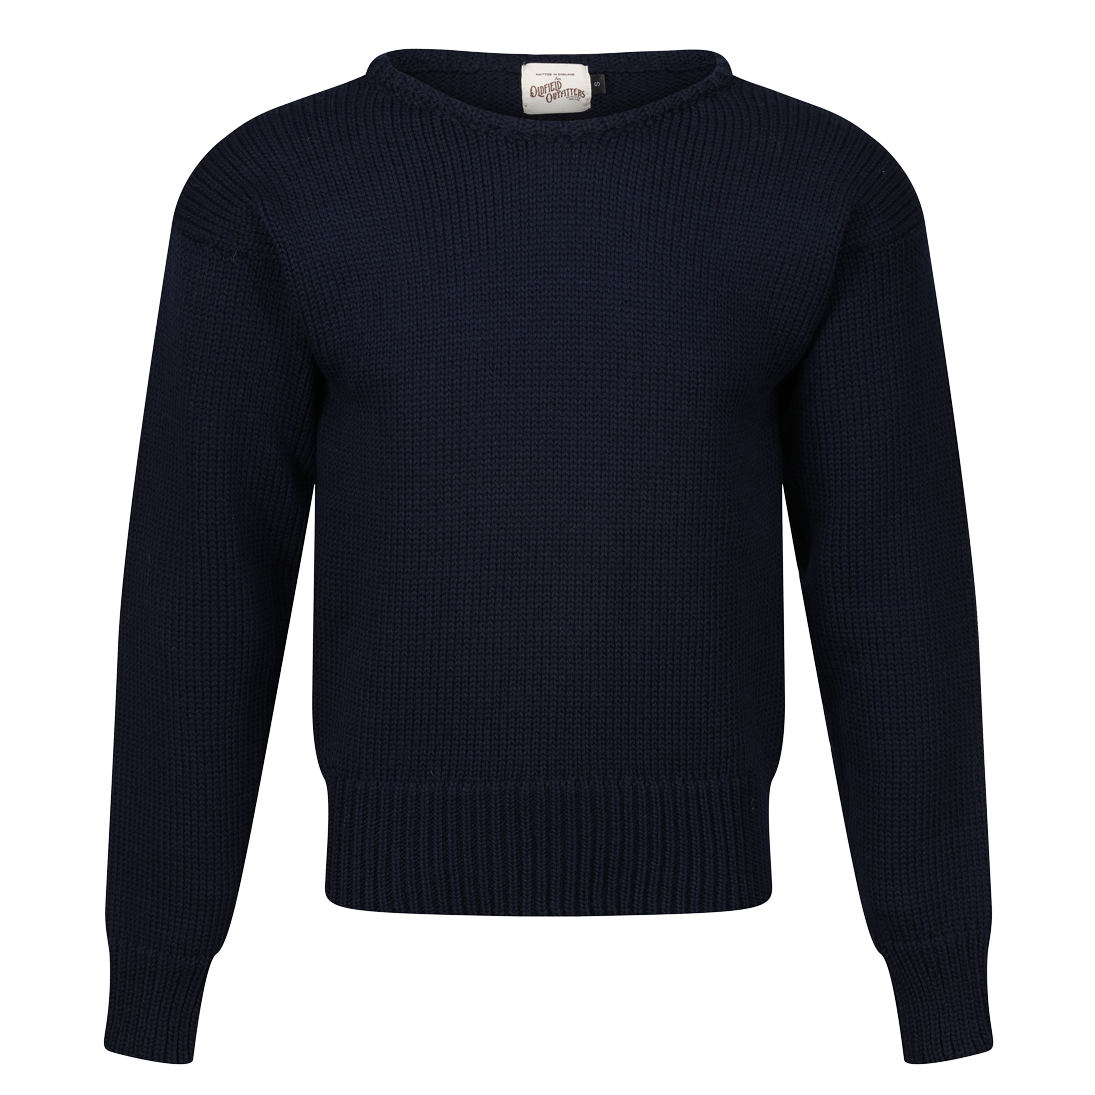 Vintage Boat neck sweater in Navy Merino wool